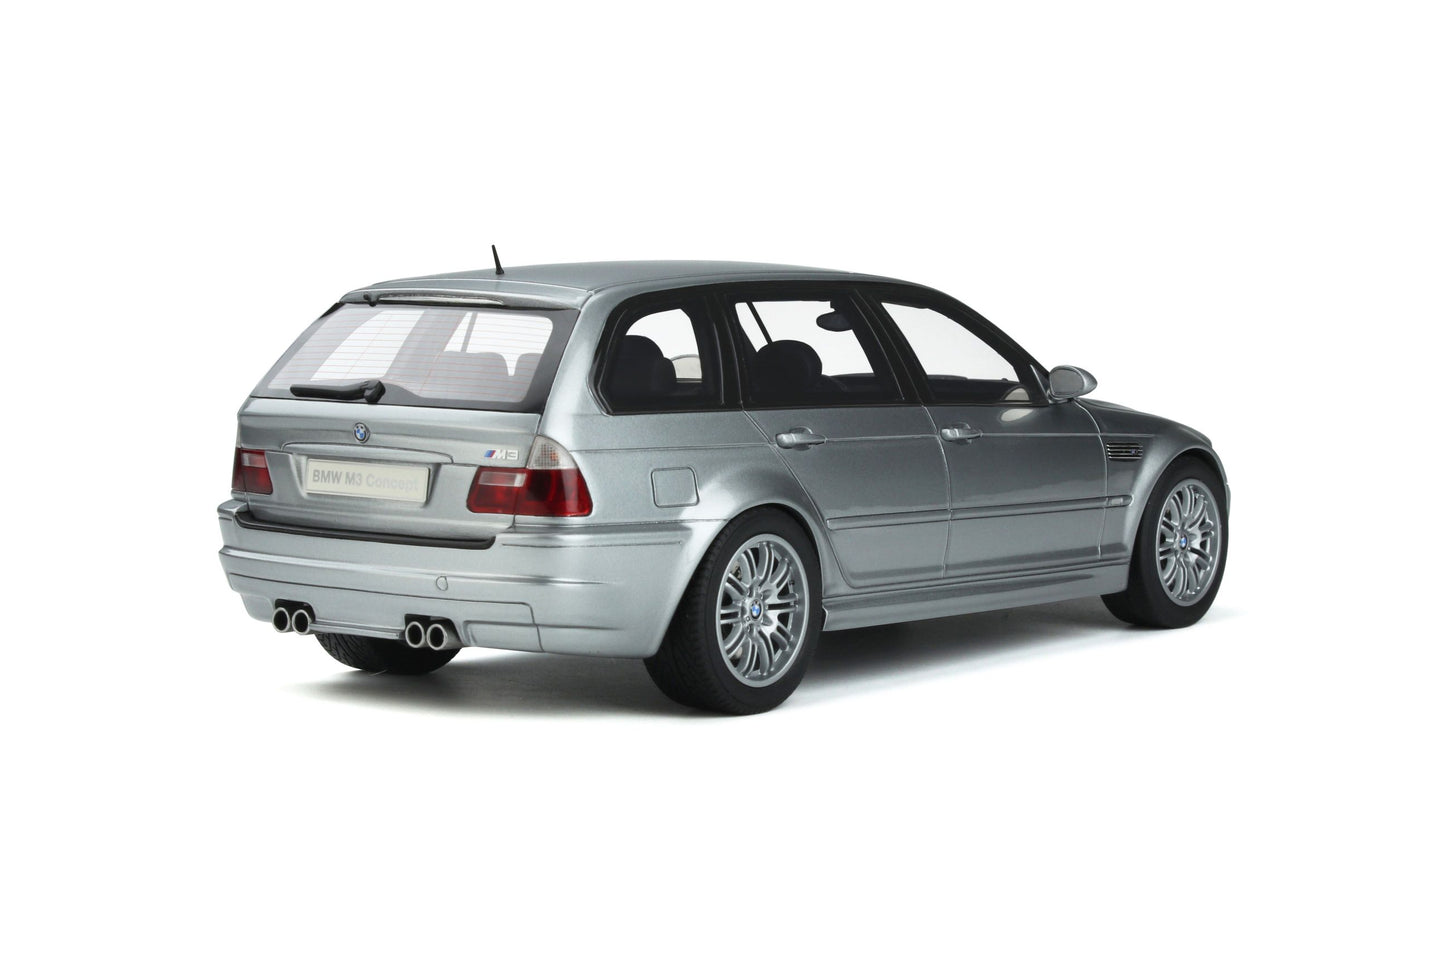 OttOmobile - BMW M3 (E46) "Touring Concept" (Chrome Shadow Metallic) 1:18 Scale Model Car